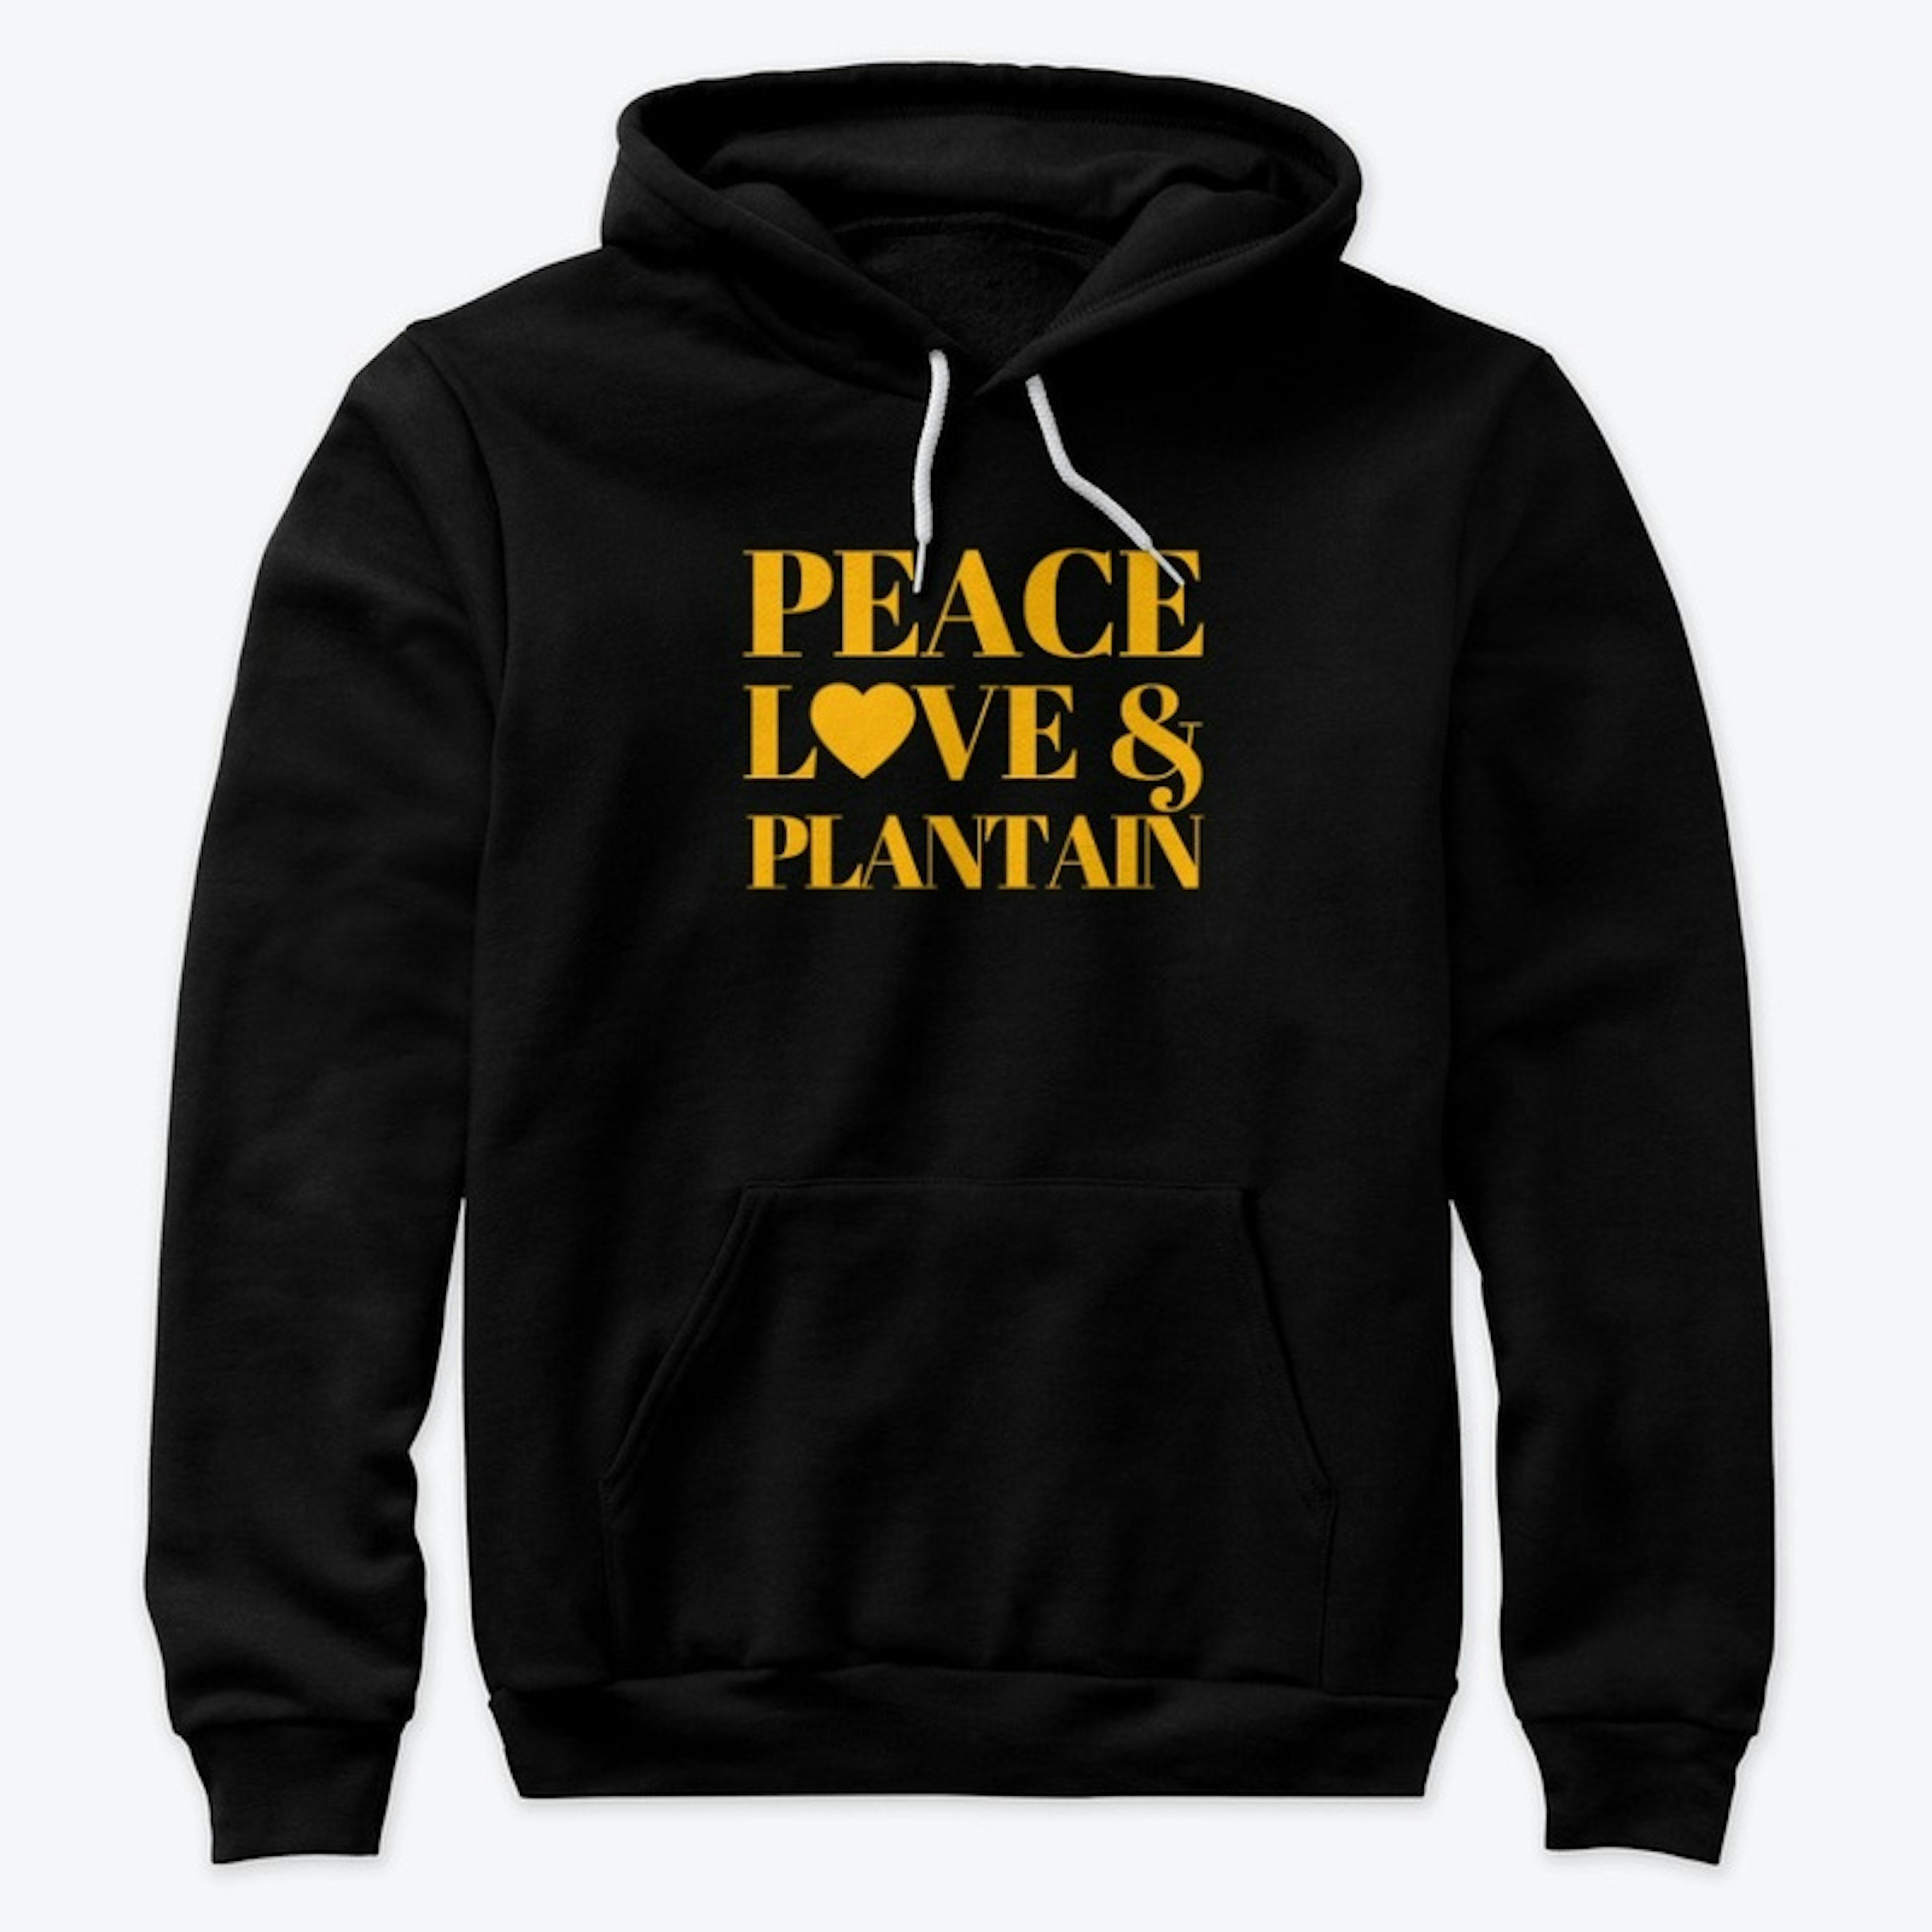 "Peace, Love & Plantain"